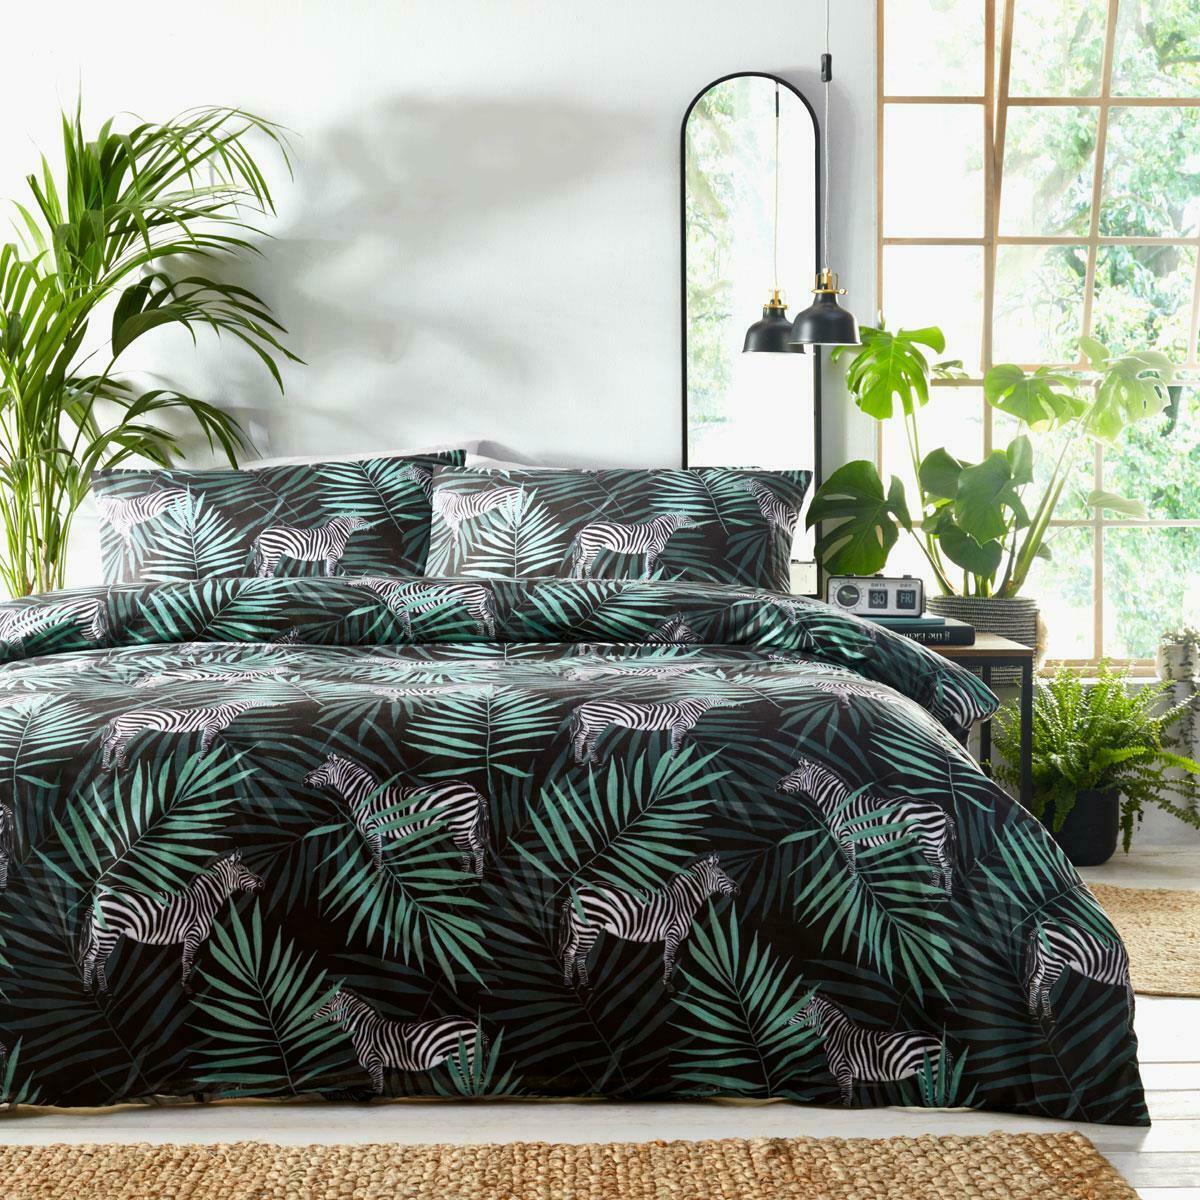 Zebra Jungle Palm Leaf Print Duvet Cover Reversible Bedding - Home Inspired Gifts